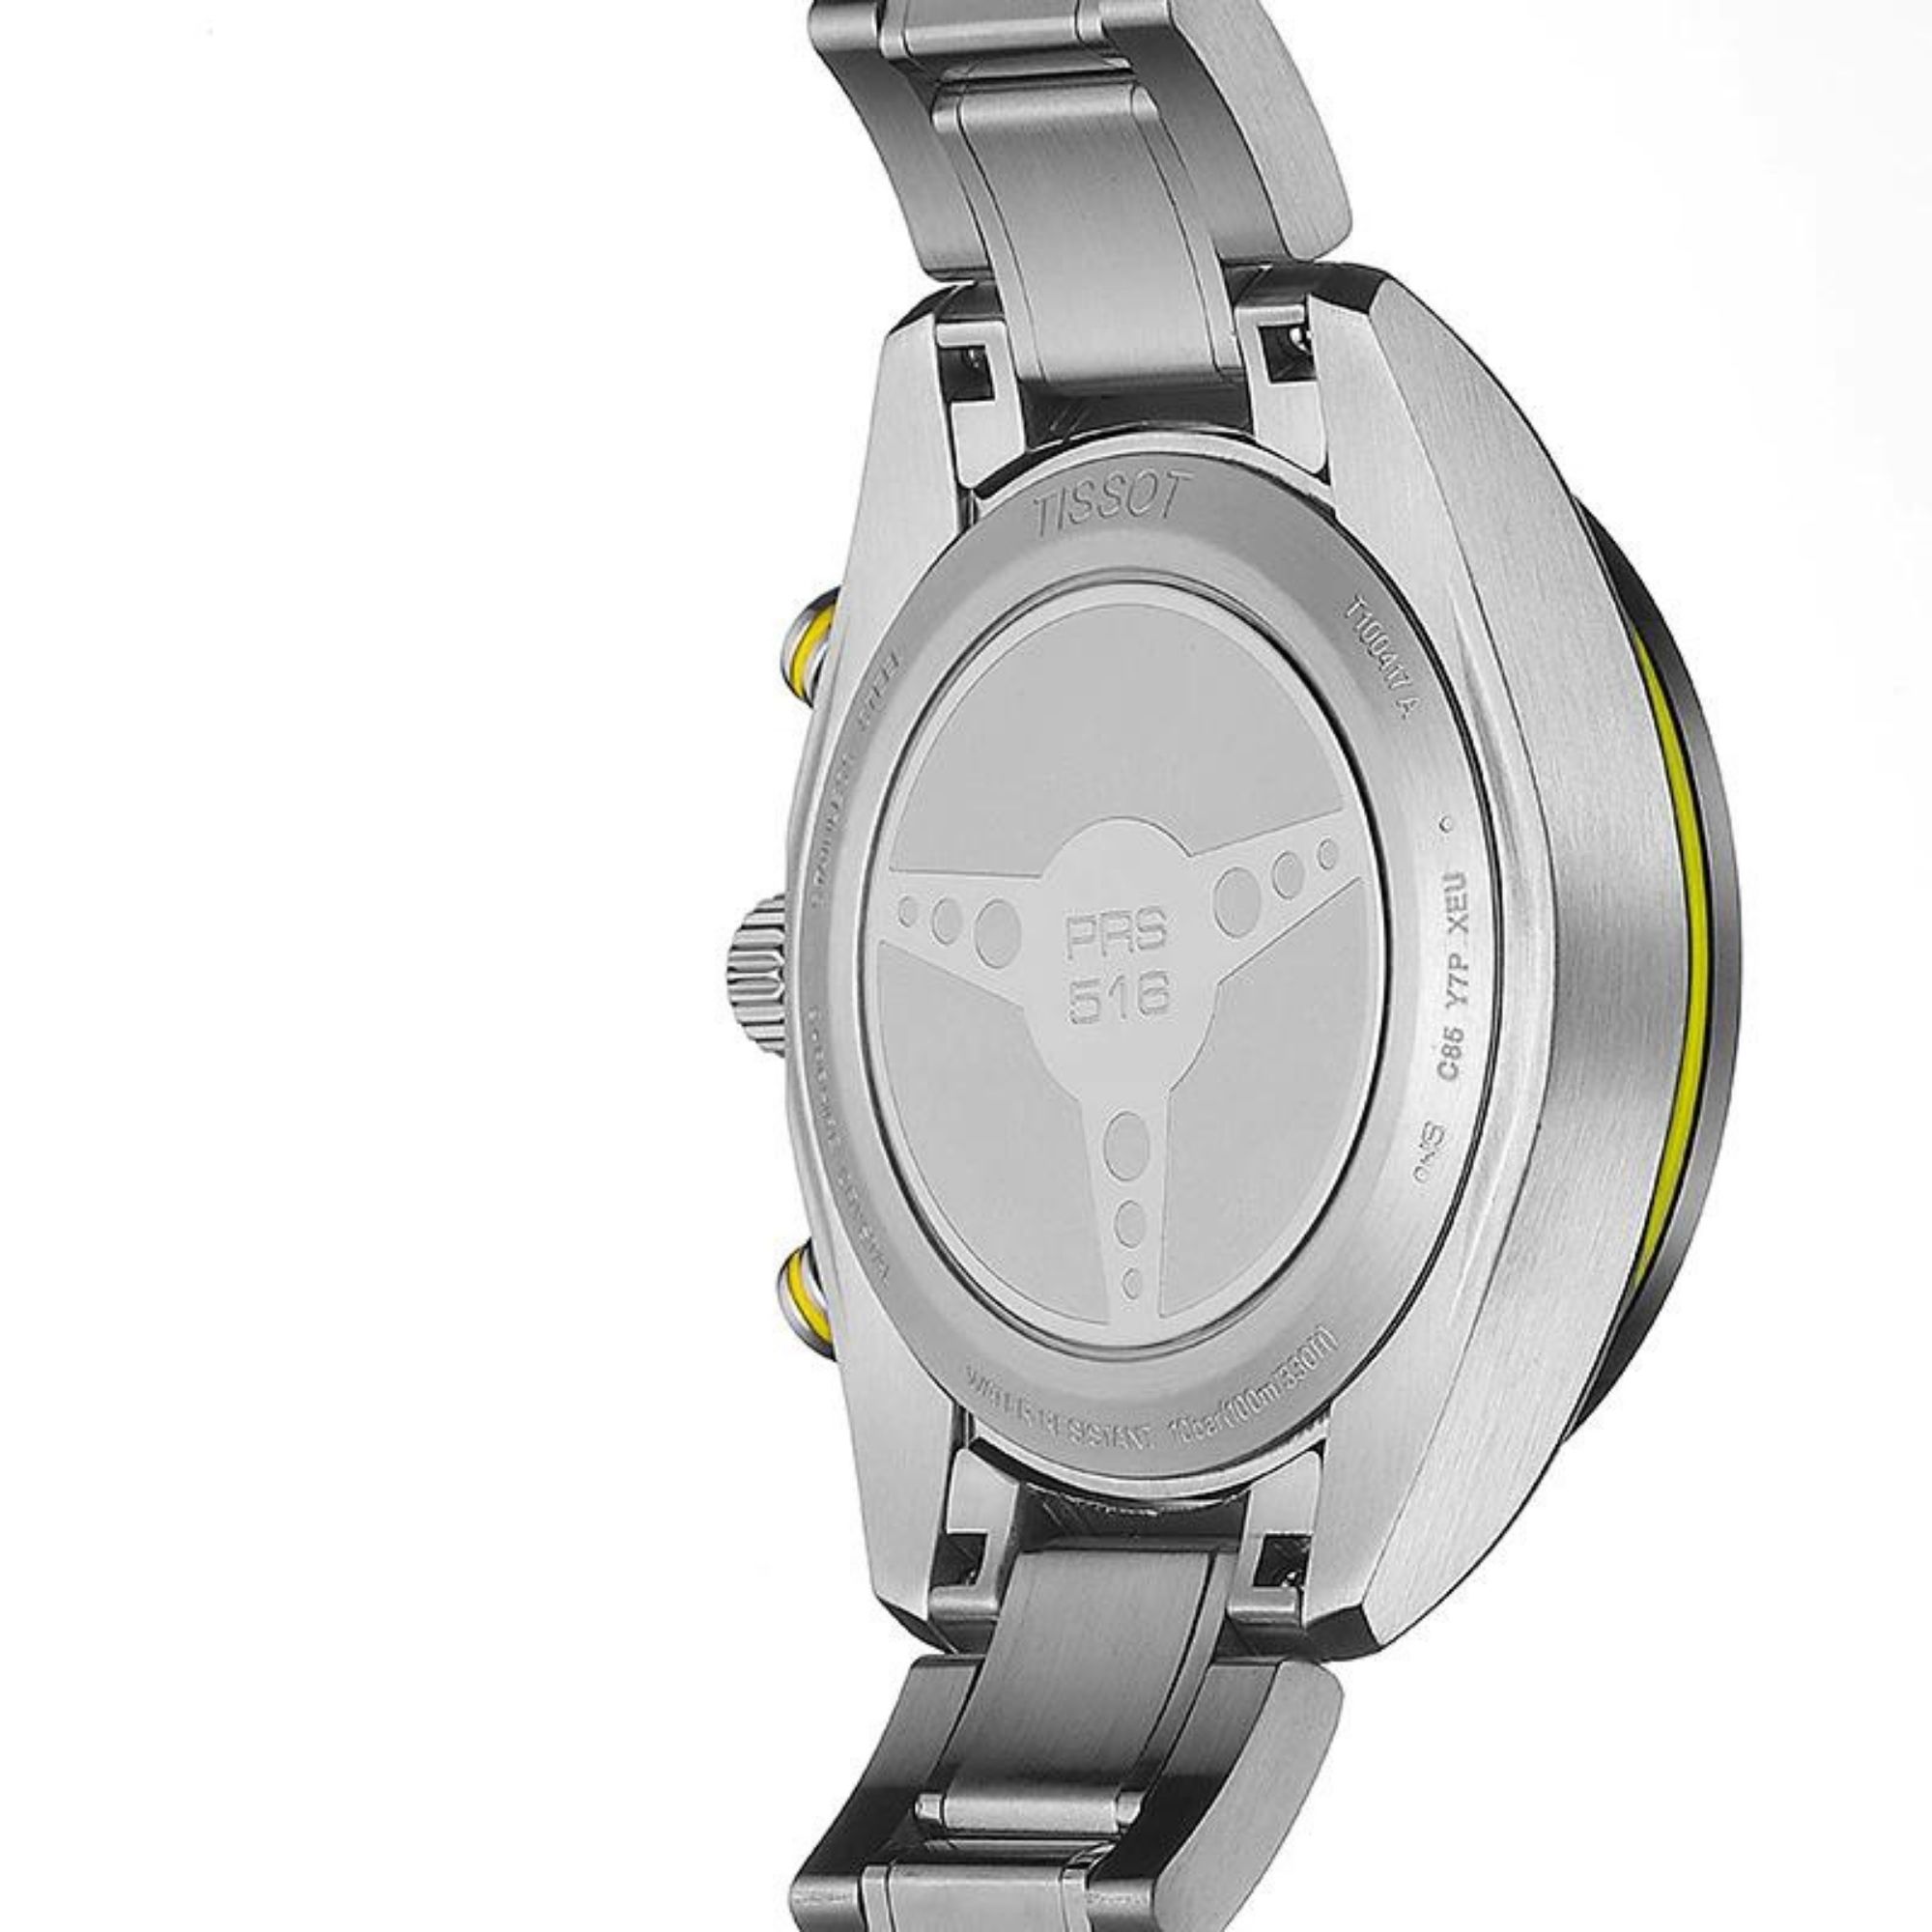 Relógio Tissot T-Sport PRS 516 Preto T100.417.11.051.00